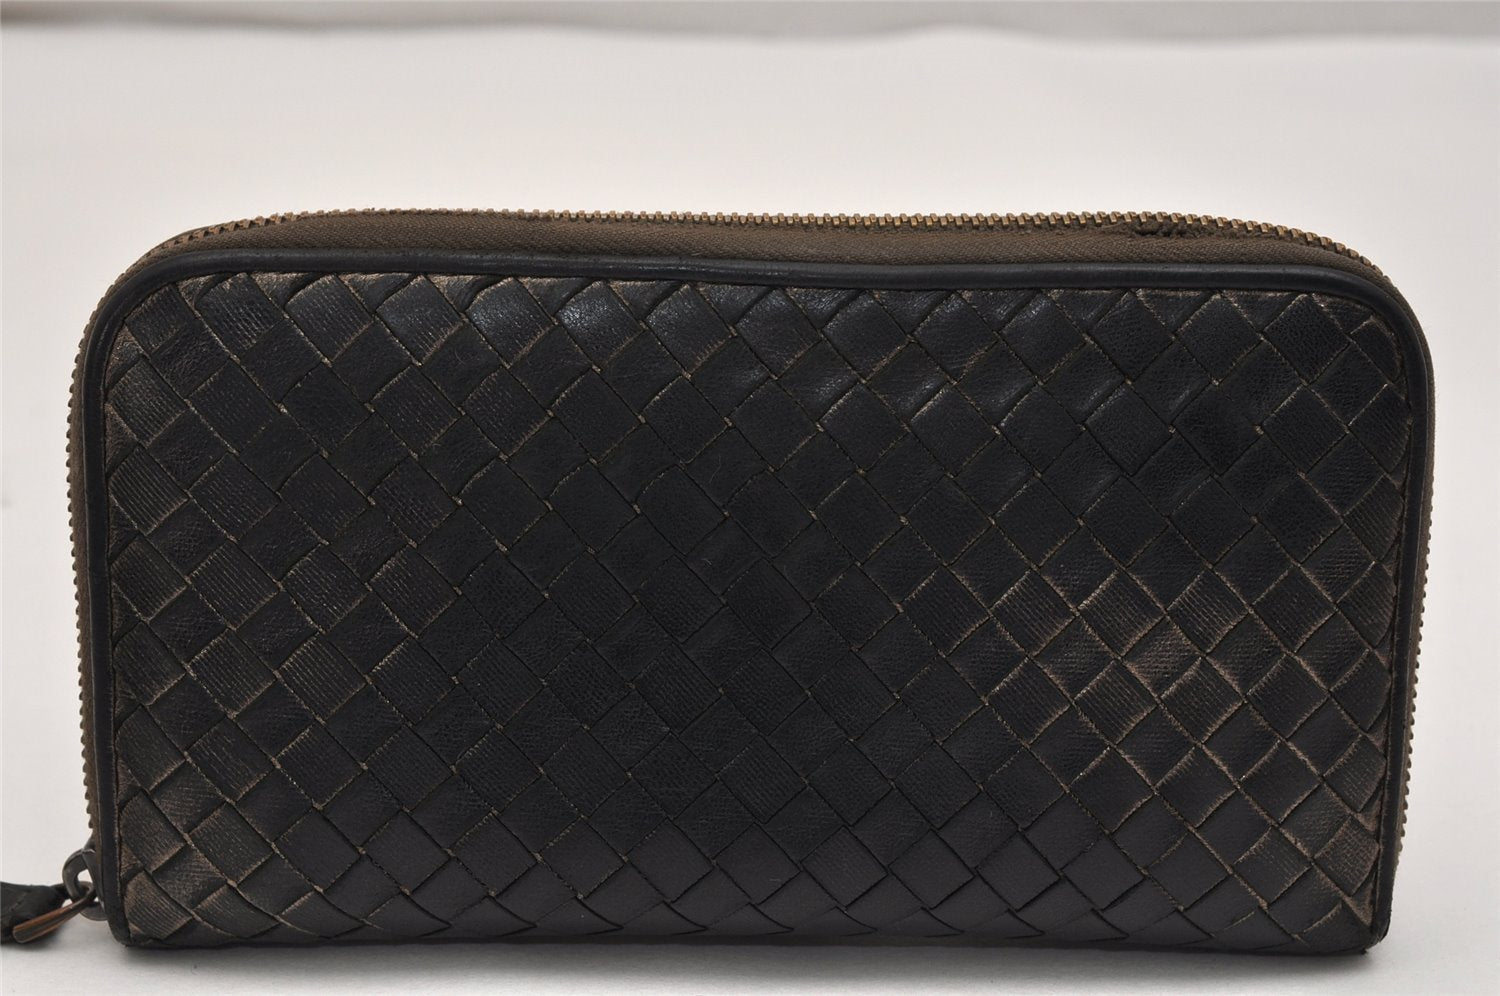 Authentic BOTTEGA VENETA Intrecciato Leather Long Wallet Purse Black Box 8700J